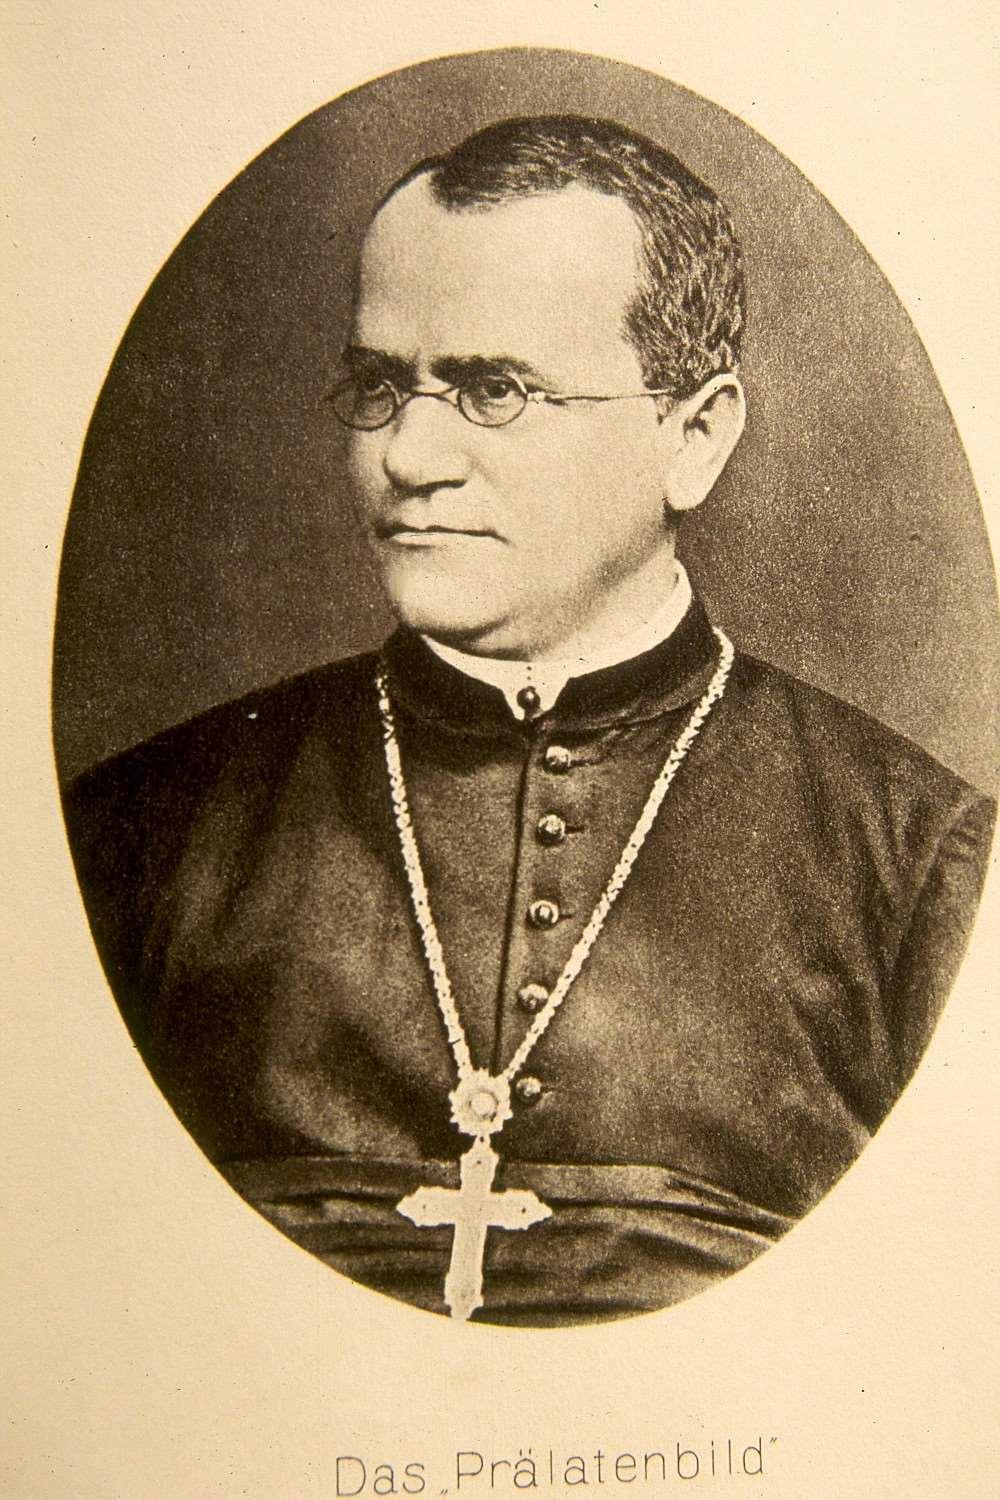 Gregor Mendel 19 th century Austrian monk Studied